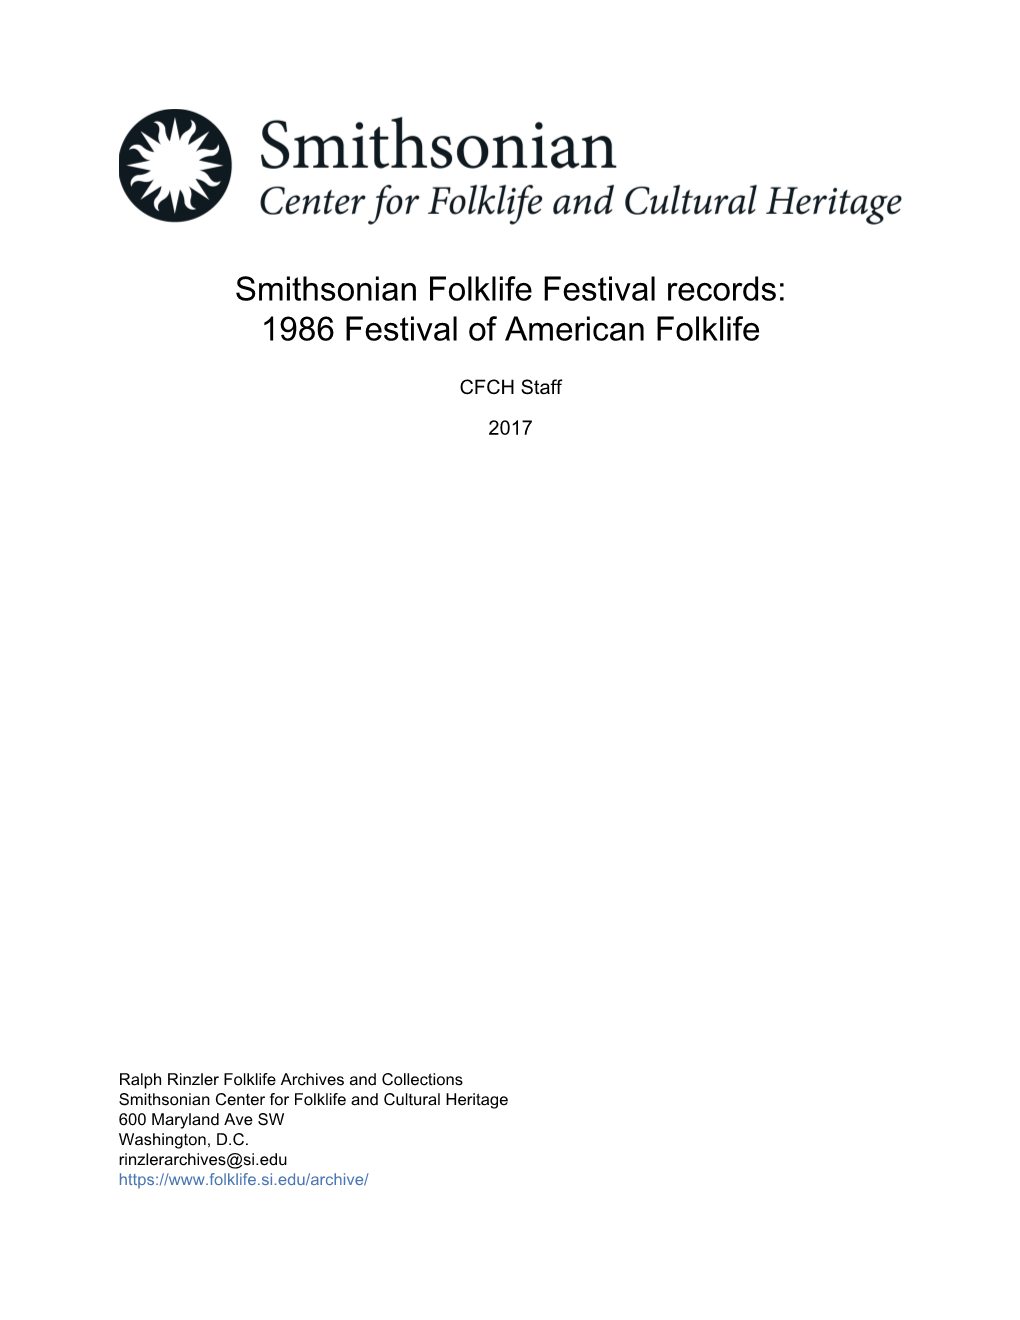 Smithsonian Folklife Festival Records: 1986 Festival of American Folklife